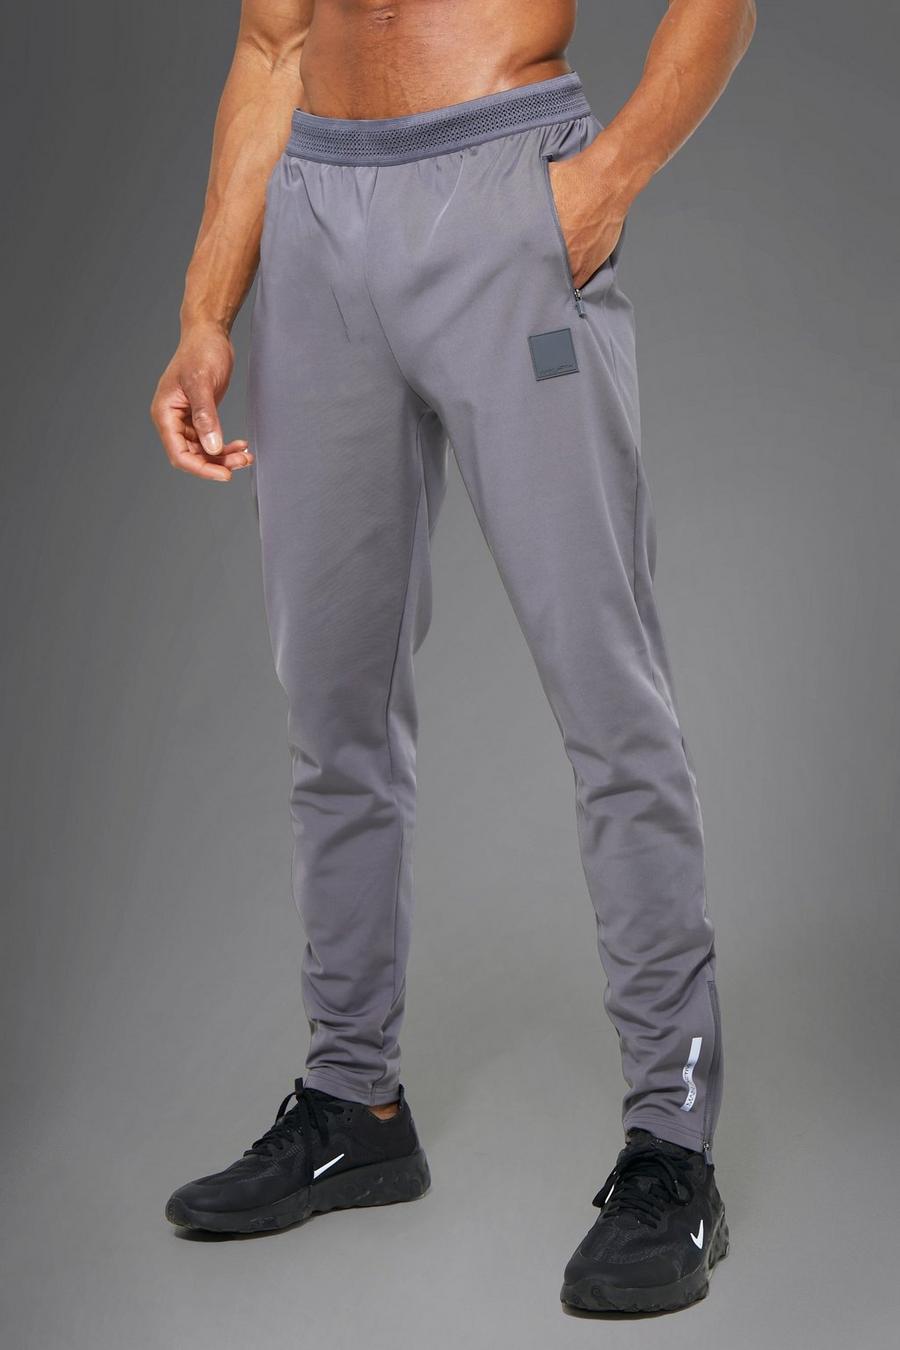 Charcoal grigio מכנסי ריצה ספורטיביים לאימונים עם כיתוב Man